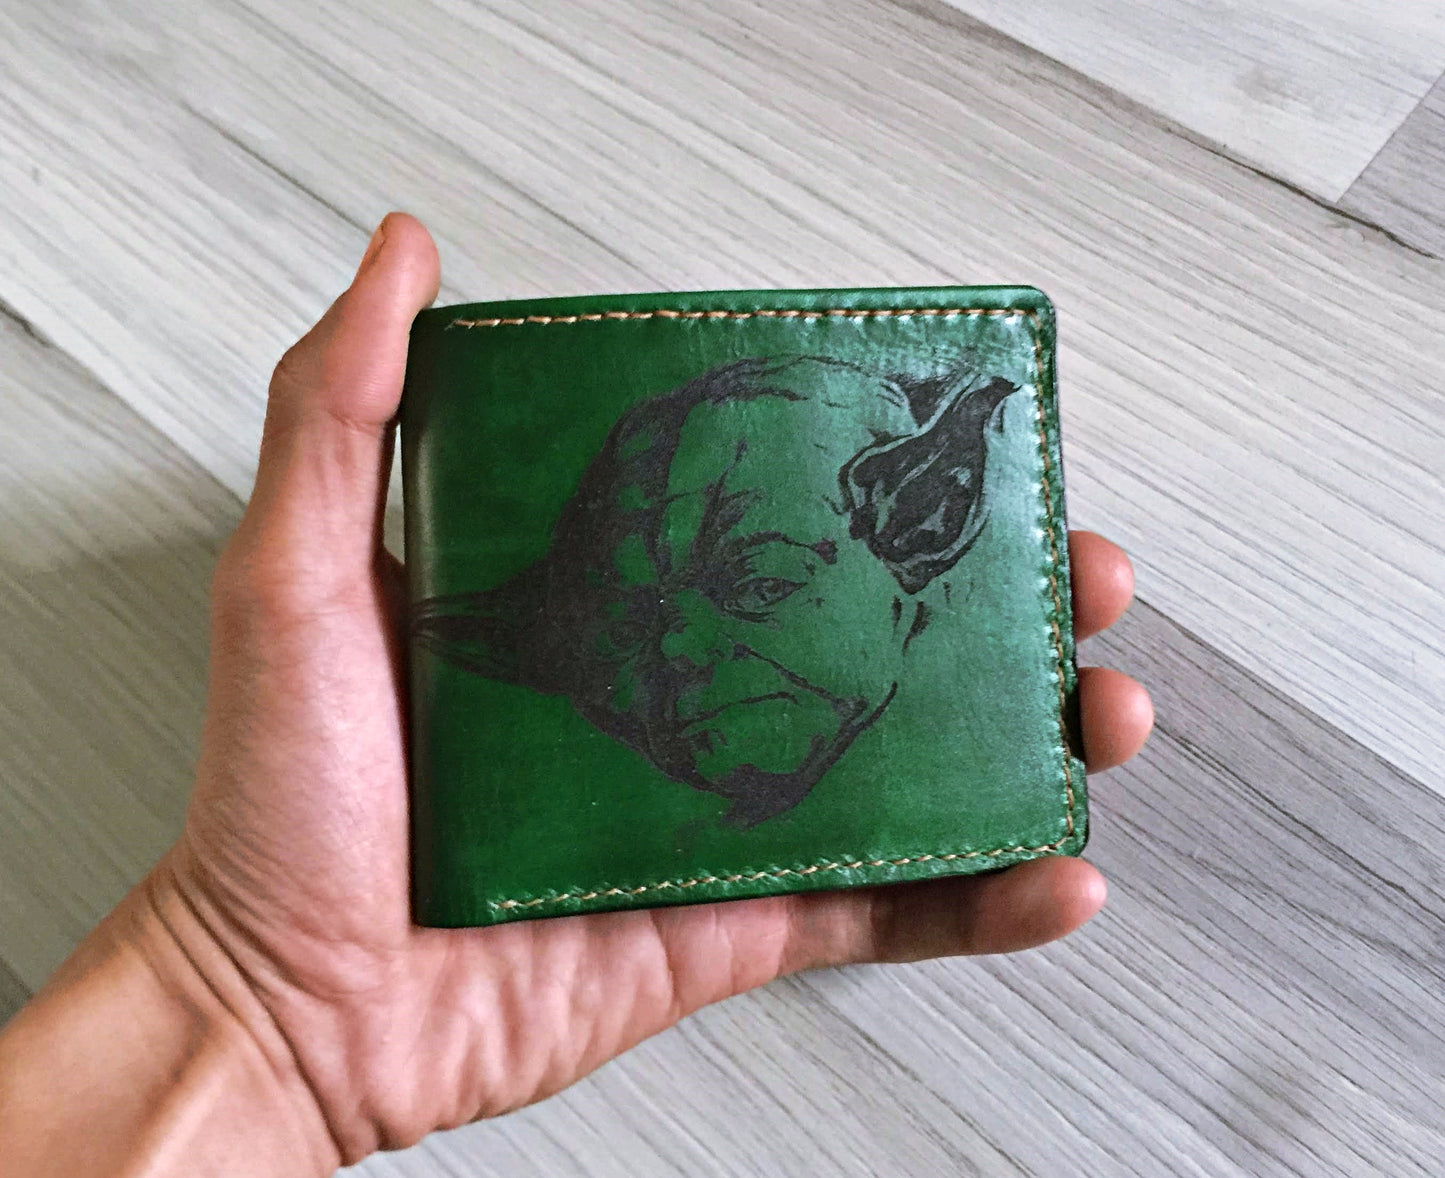 Mayan Corner - Master Yoda Starwars personalized leather handmade men's wallet, custom birthday wedding anniversary present for him, Father boyfriend brother